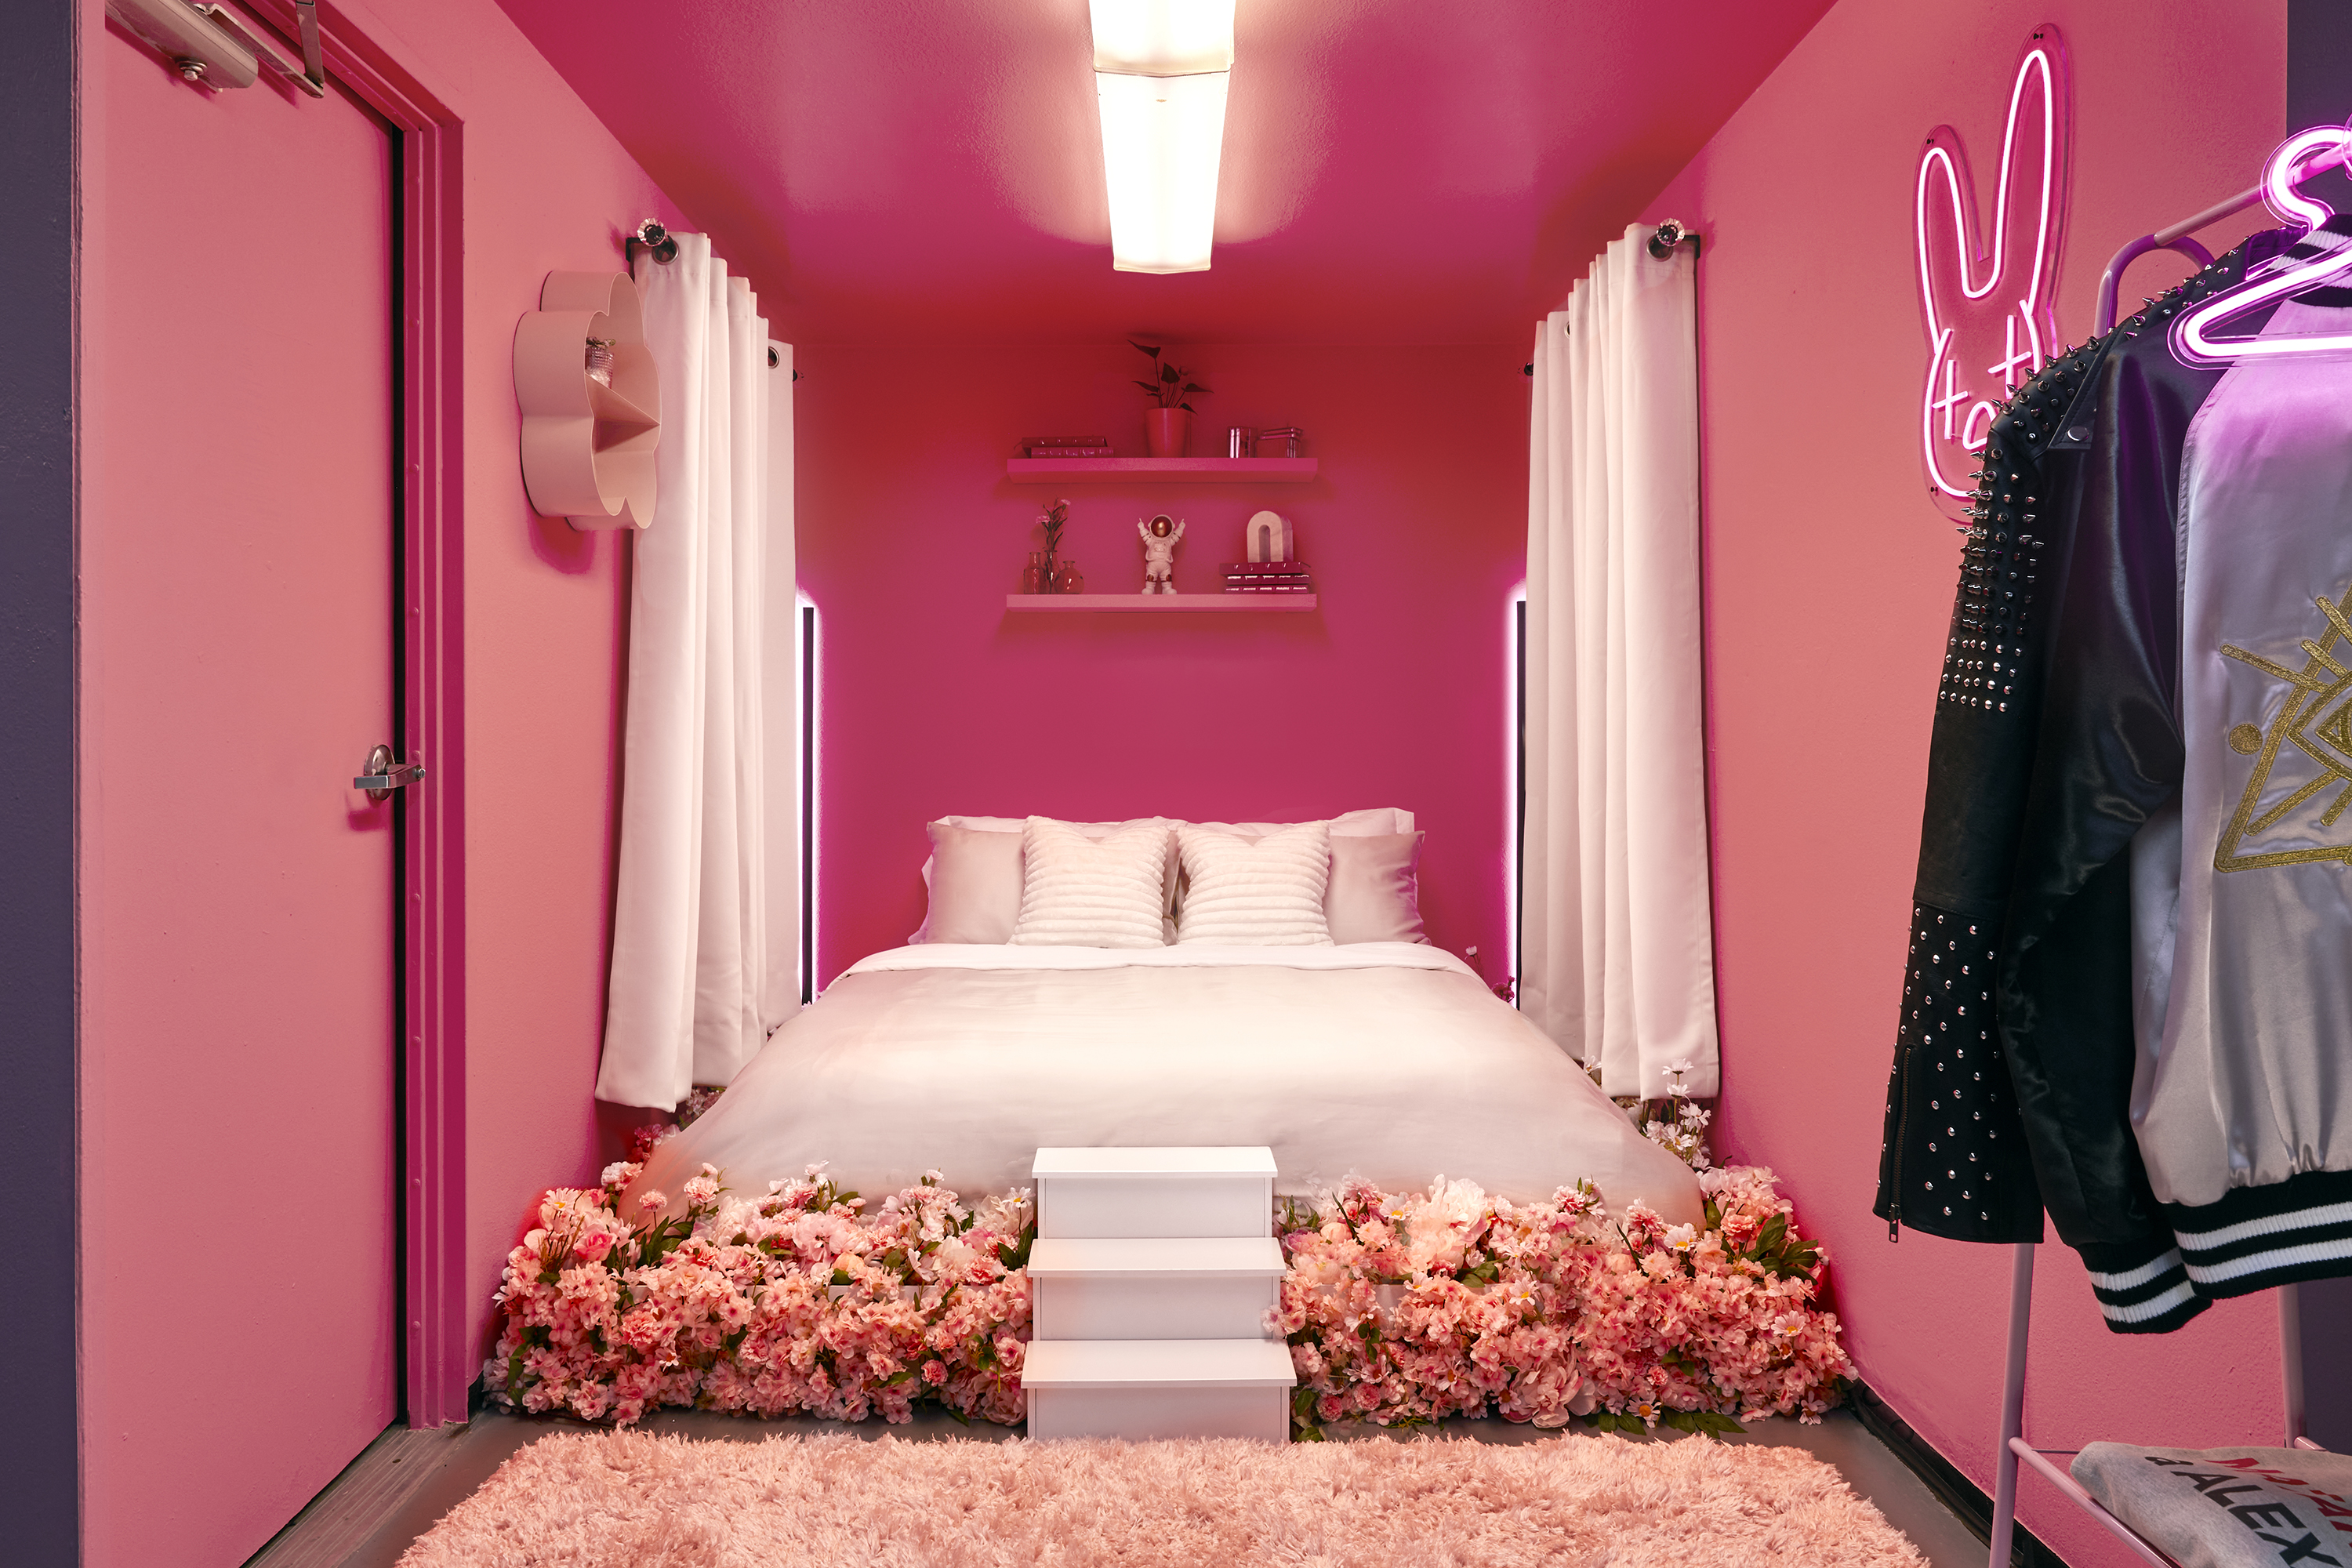 Bad_Bunny_Airbnb_05_Bedroom_Credit_Christian_Torres.jpg